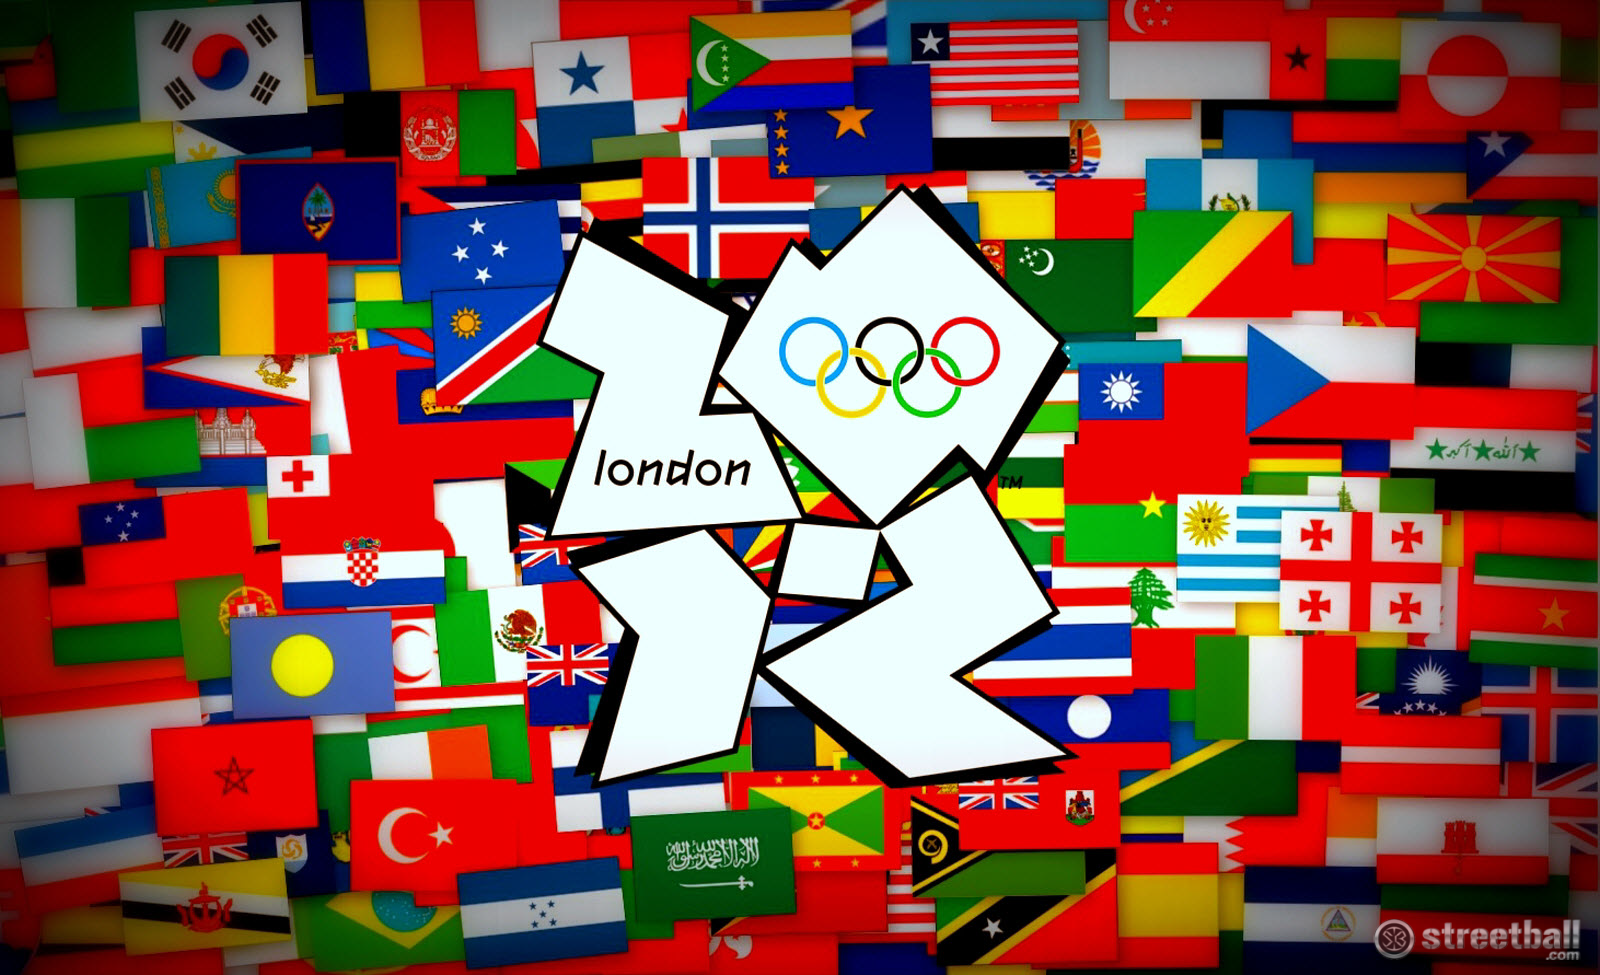 London Olympics Basketball Wallpaper - Streetball